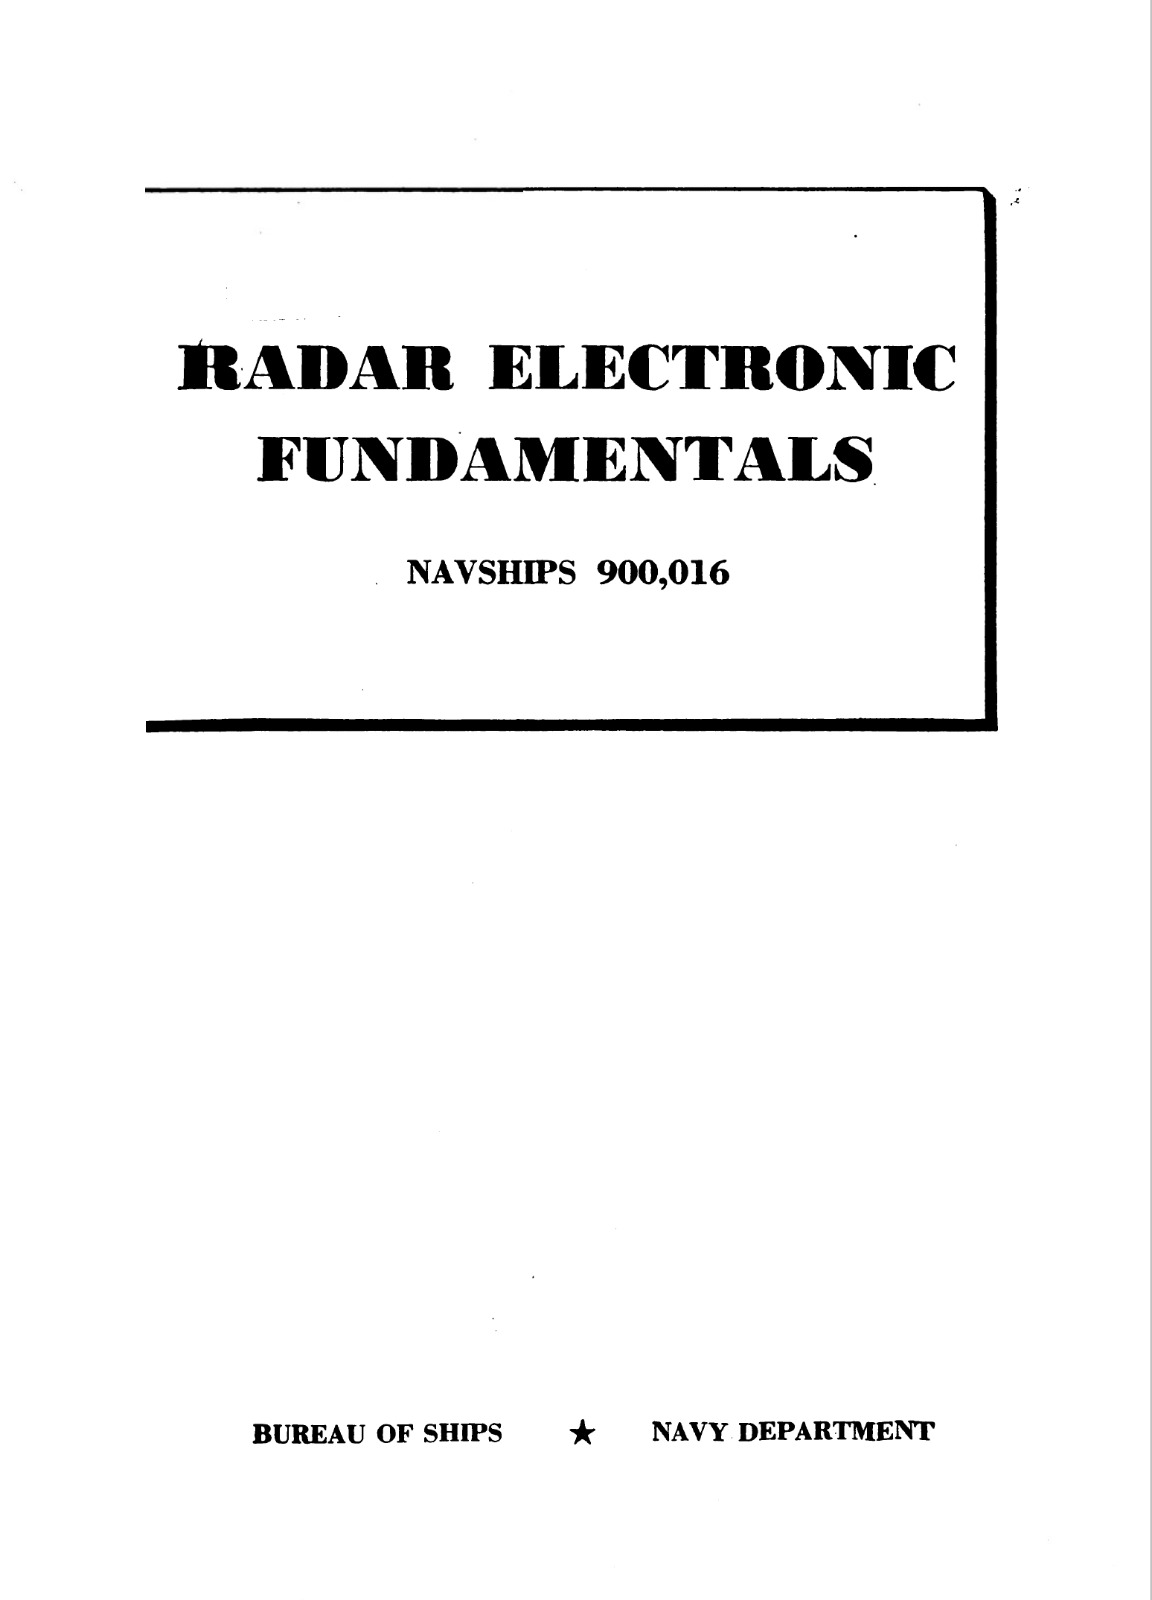 477 Page TM 11-466 NAVSHIPS 900,016 RADAR ELECTRONIC FUNDAMENTALS Manual on CD